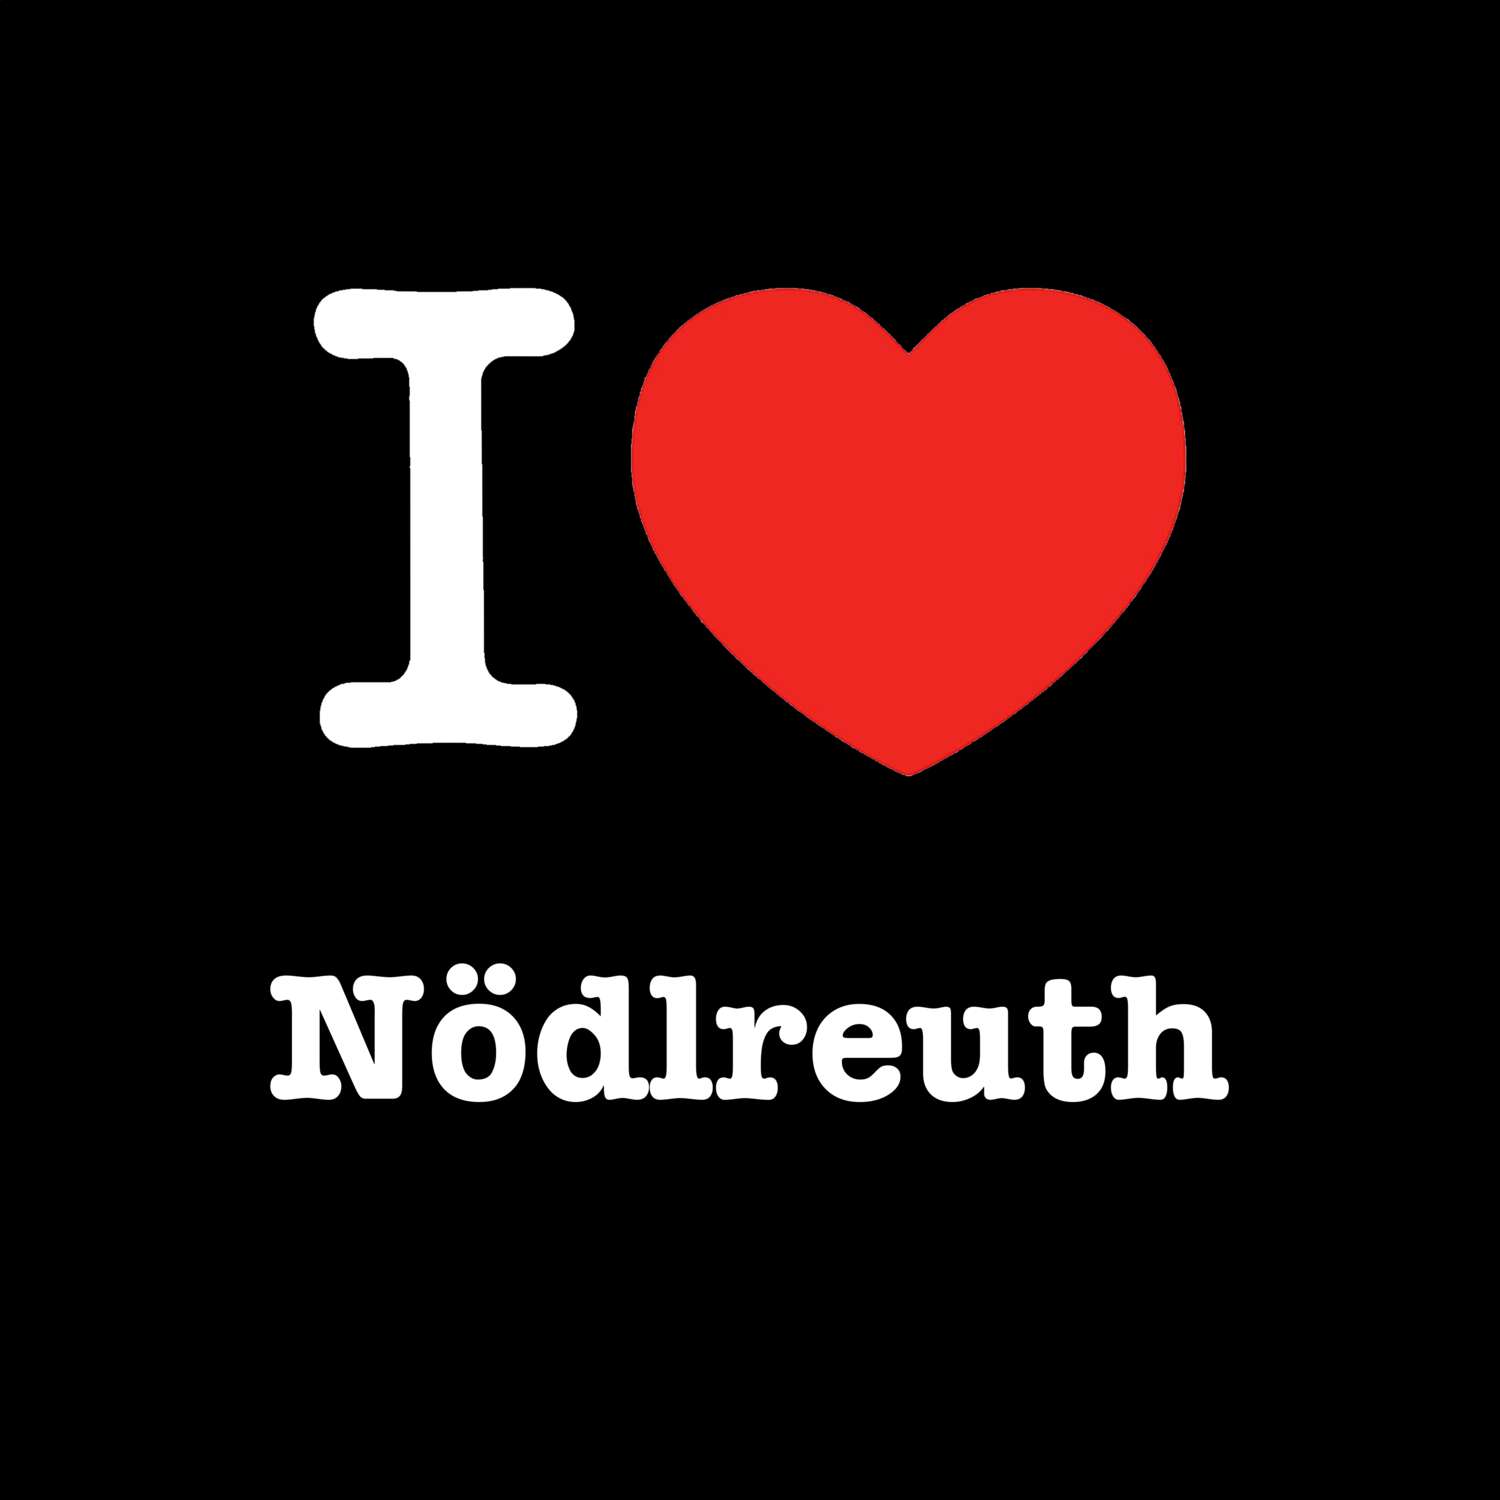 Nödlreuth T-Shirt »I love«